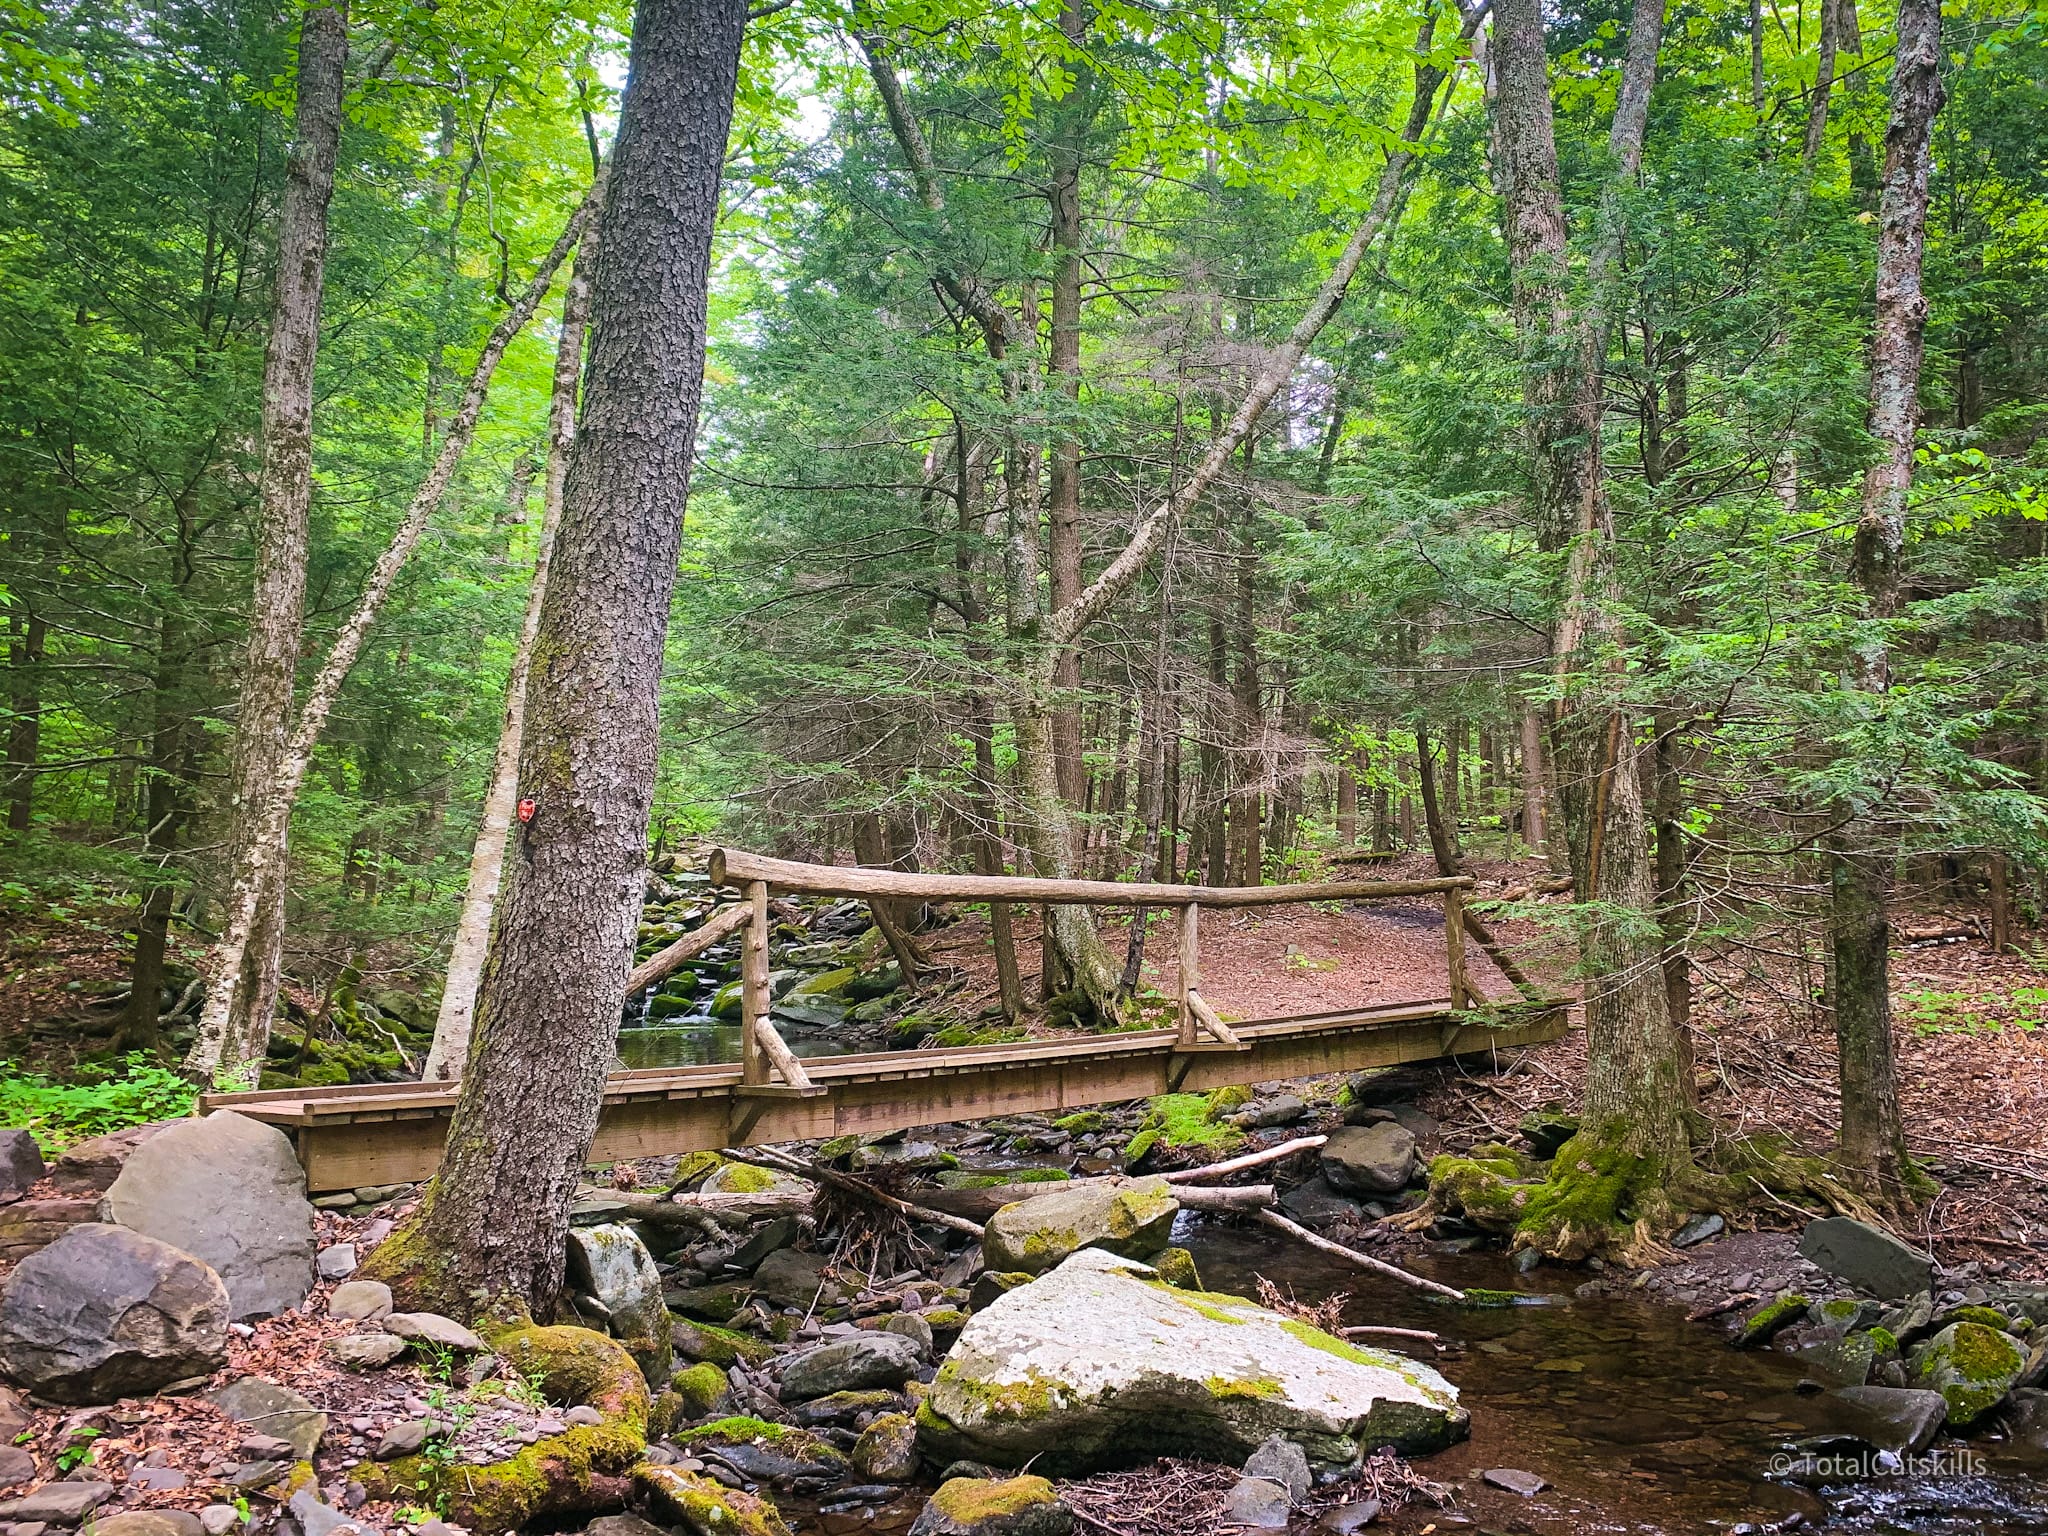 footbridge in woods